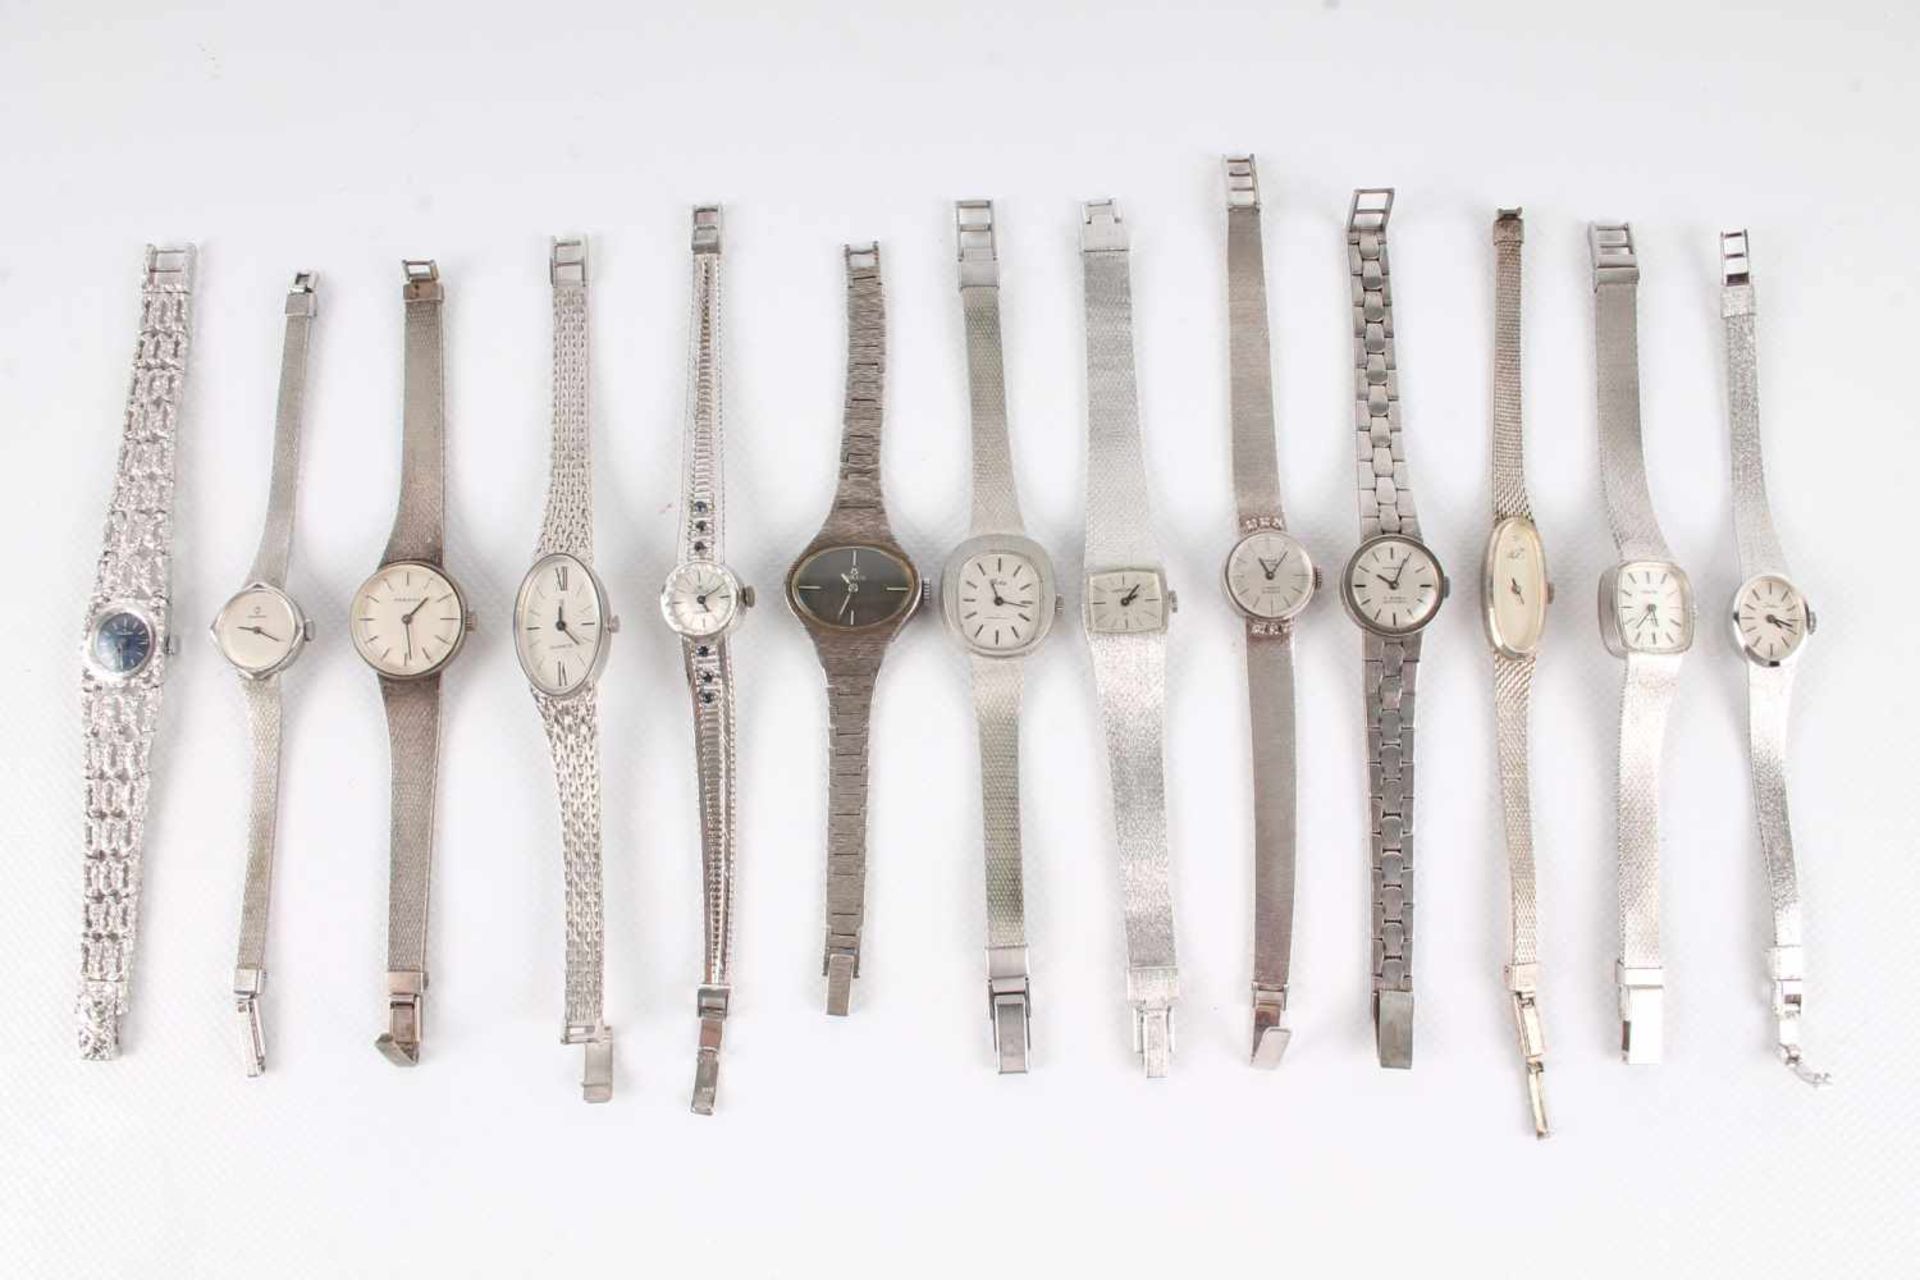 13 Silber Armbanduhren, 13 silver wristwatches,